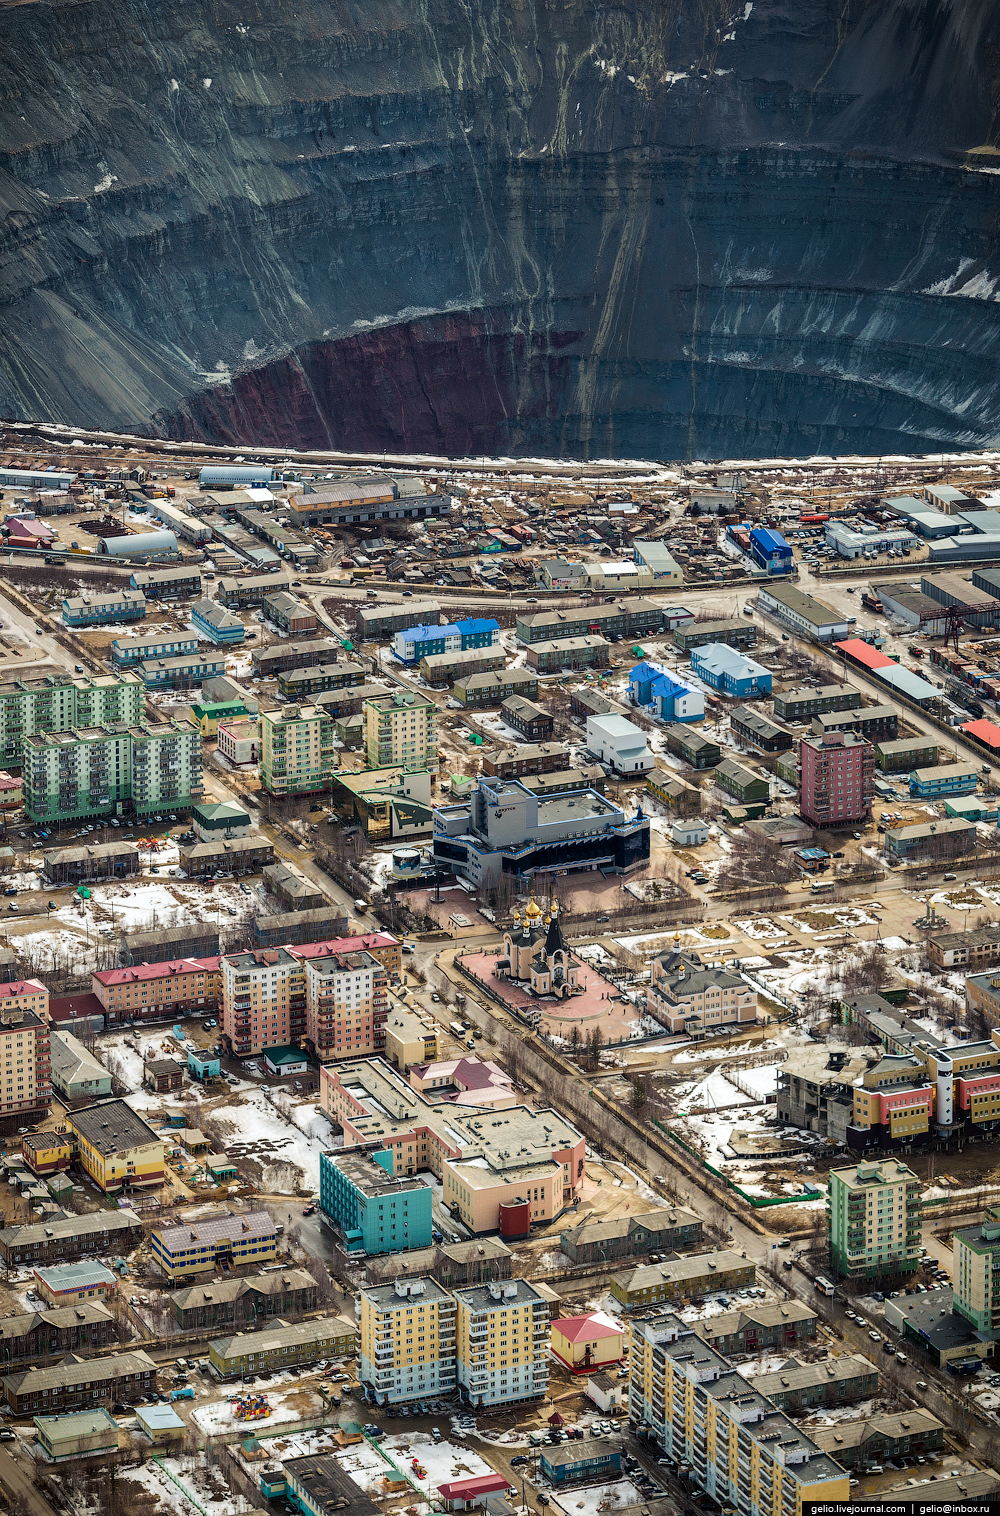 The Huge Diamond Mine That Helped Build The Soviet Union